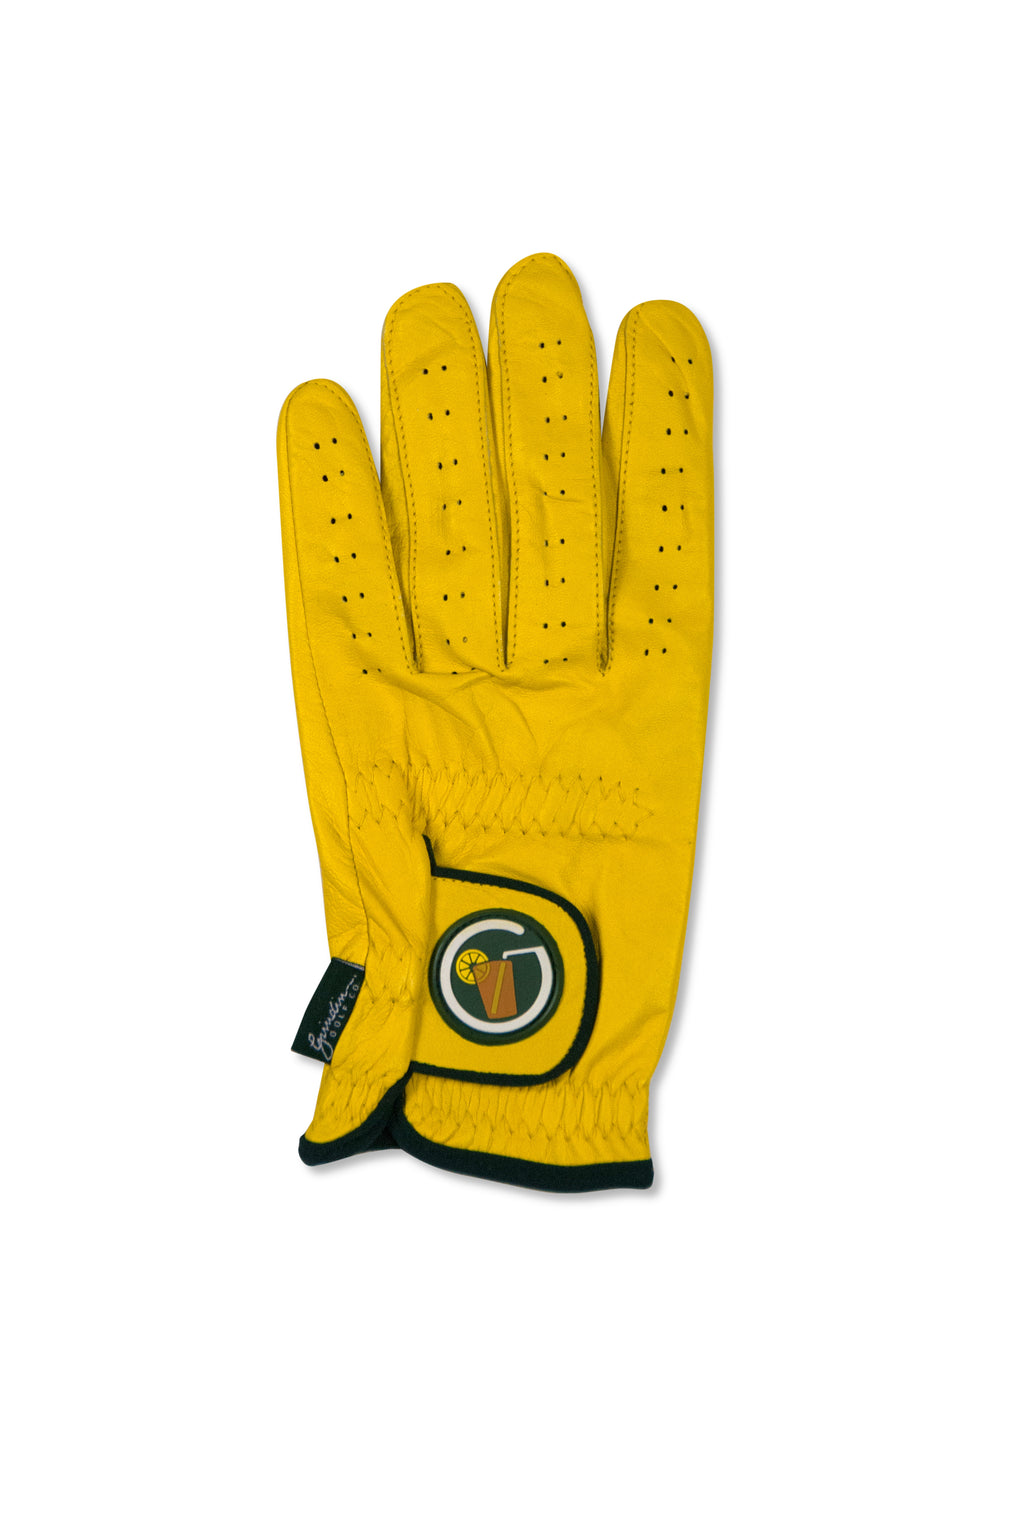 Circle "SWEET" Tea Logo - Yellow Cabretta Leather Golf Glove